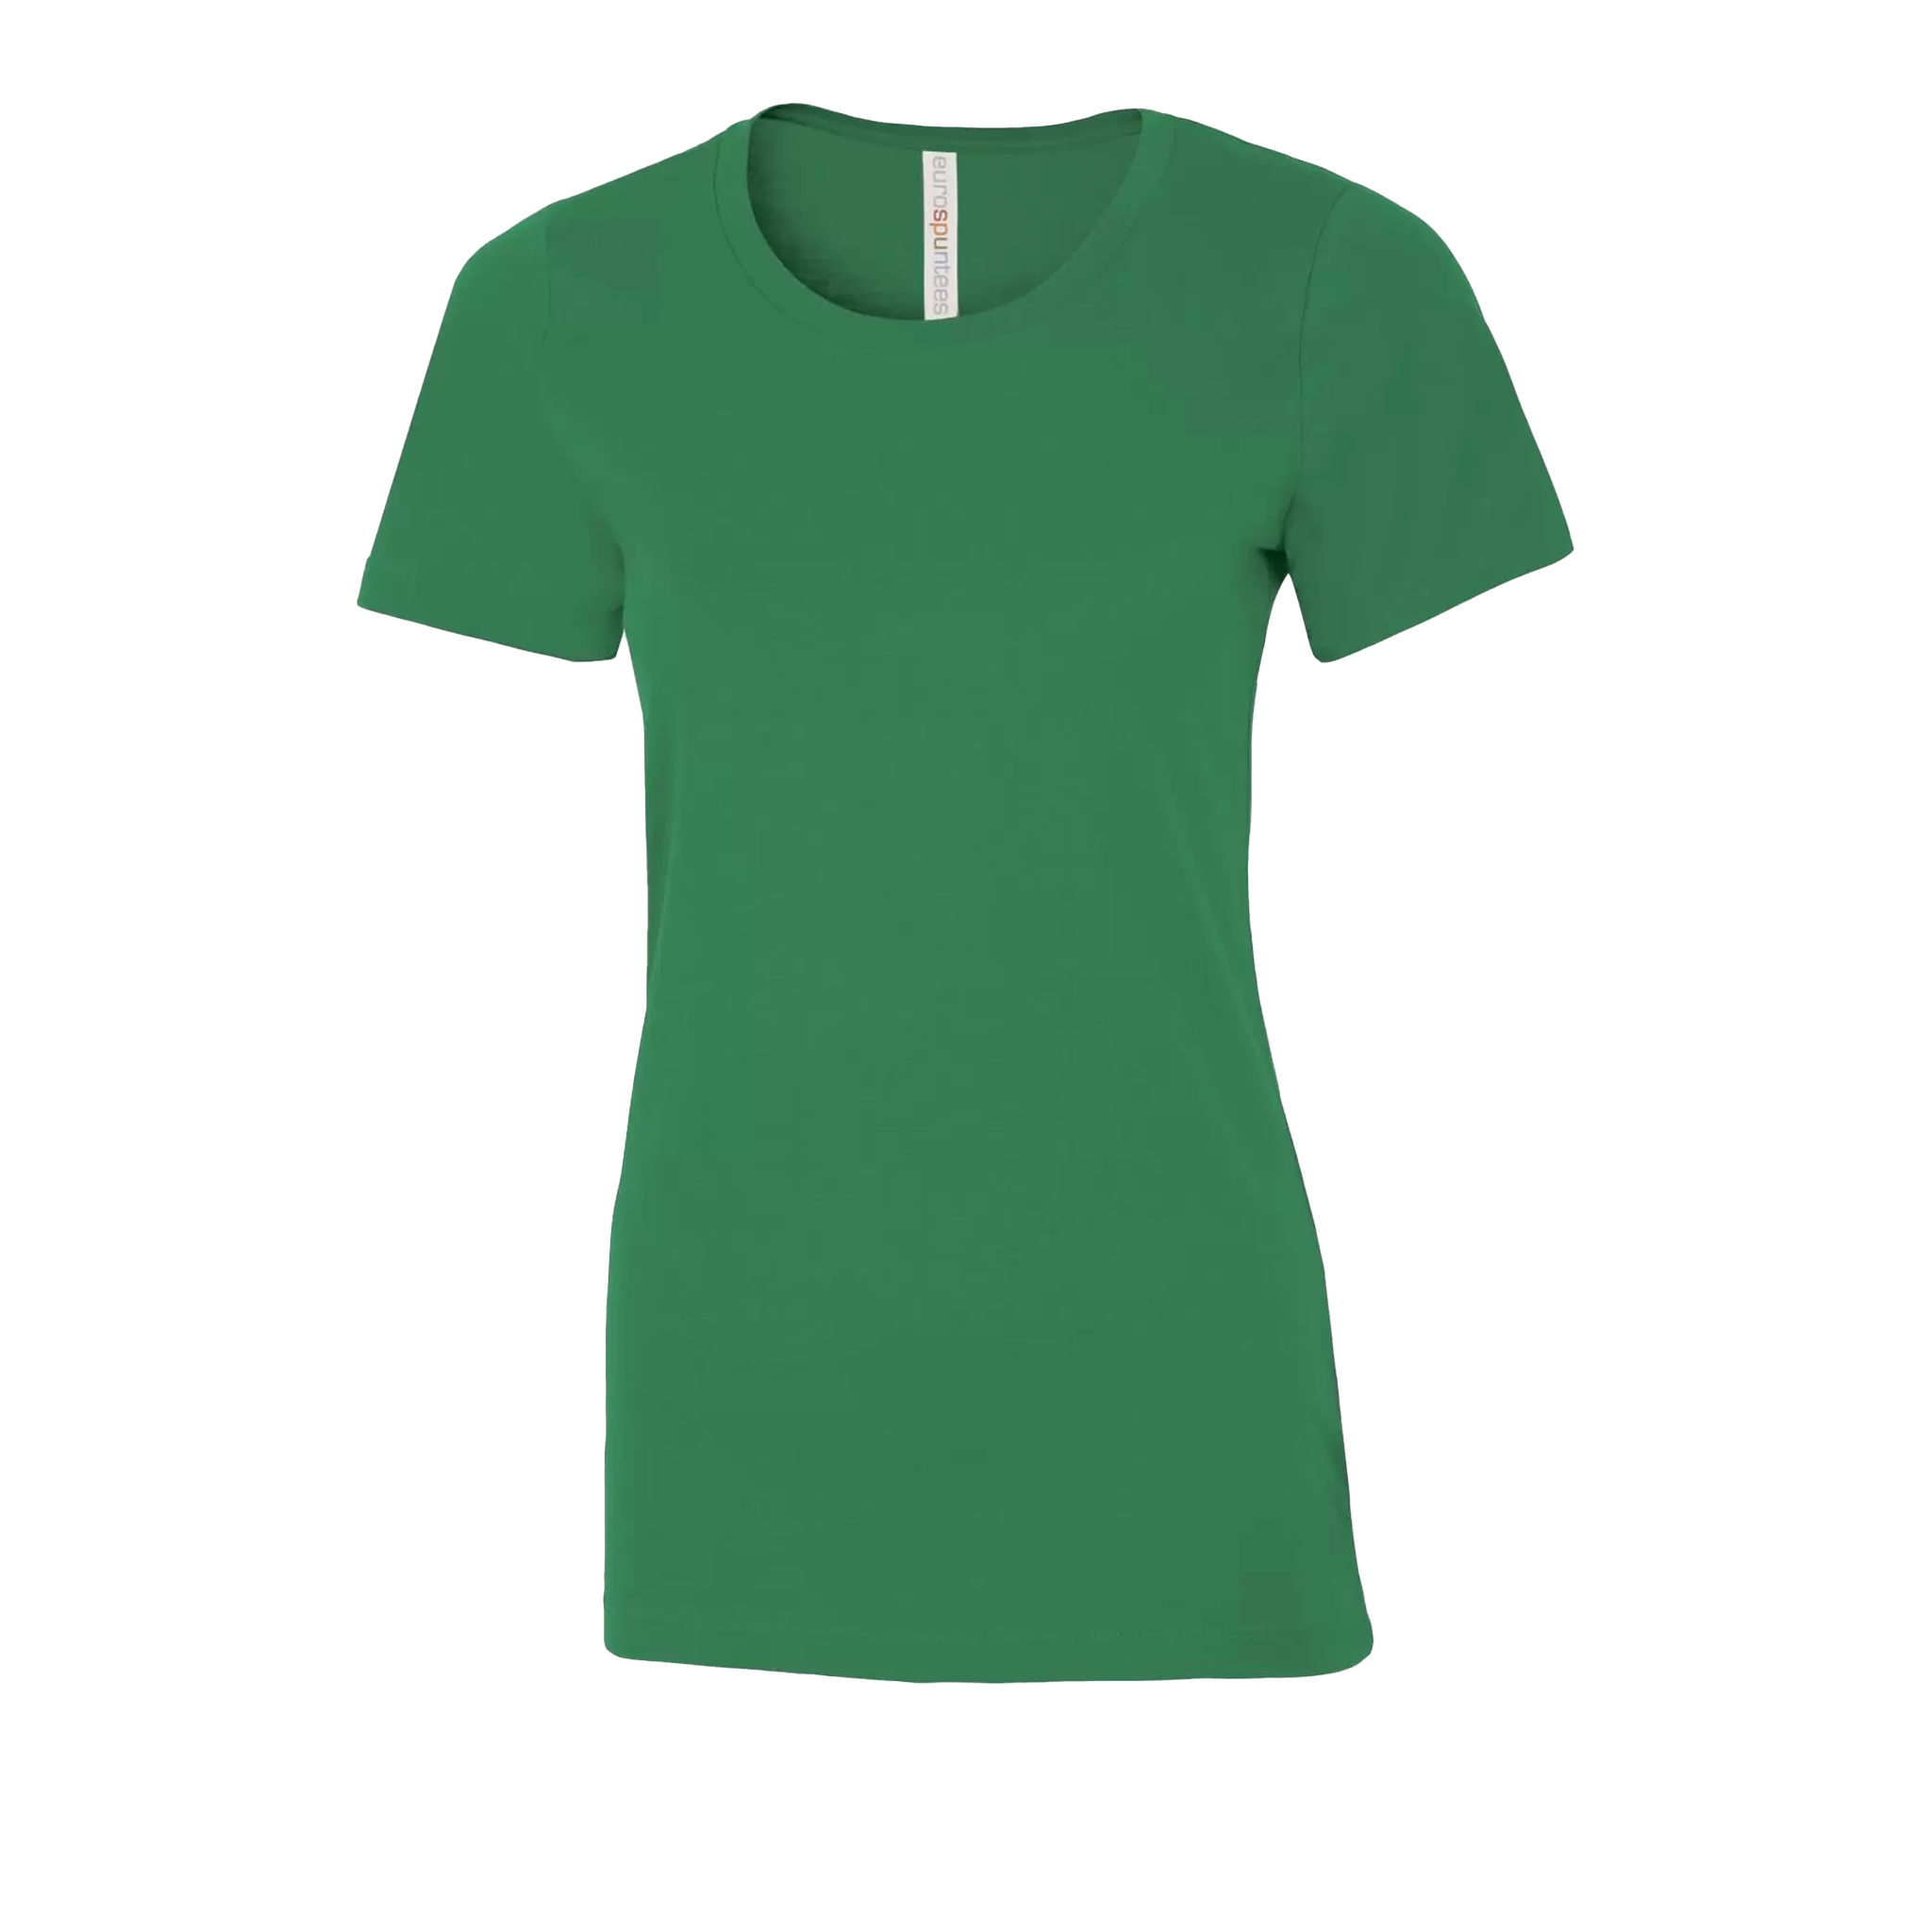 ATC Eurospun Ring Spun T-Shirt - Women's Sizing XS-4XL - Green